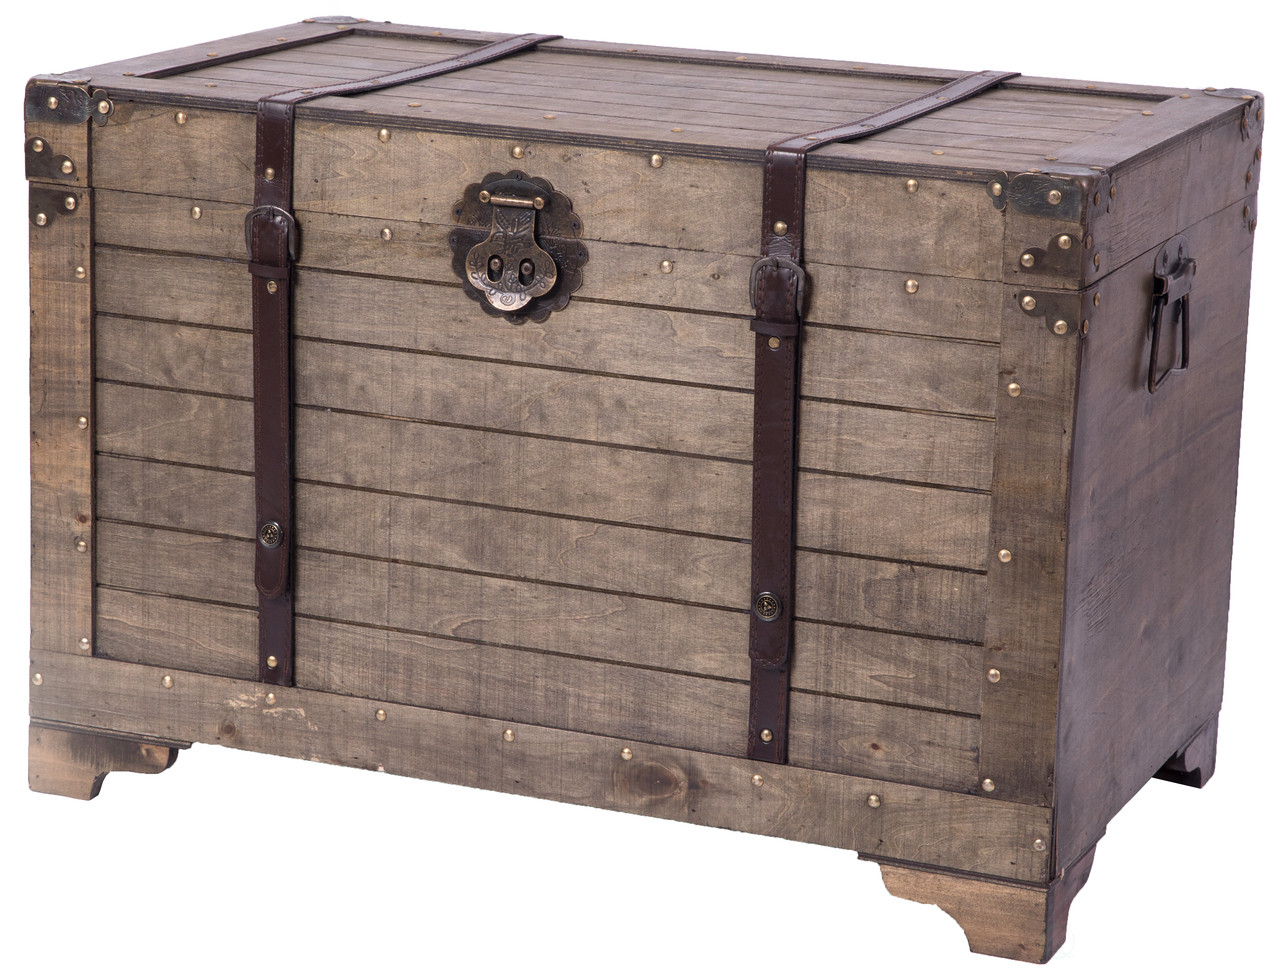 Vintage Wood Metal Steamer Trunk Chest coffee table storage box